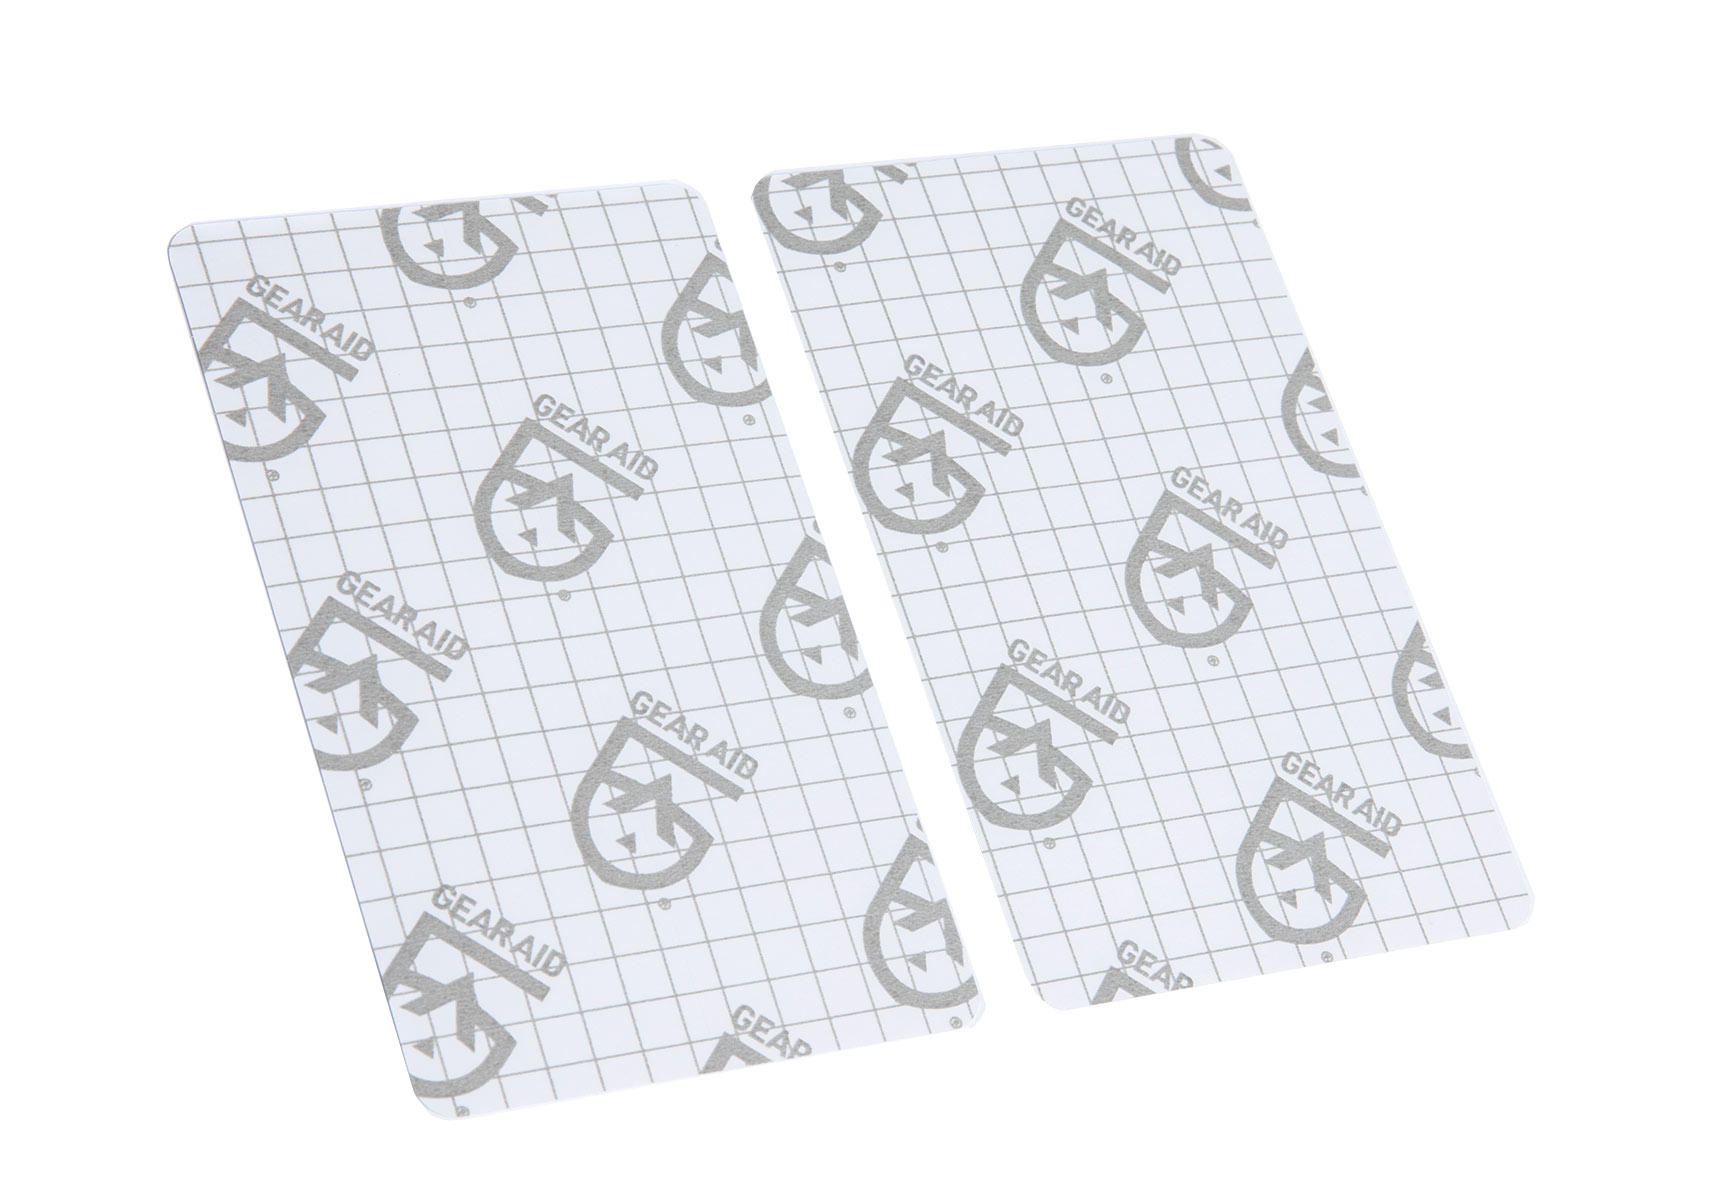 GEAR AID 2-Piece Tenacious Tape Flex Patches, 3 x 5 - Clear (2-Pack)